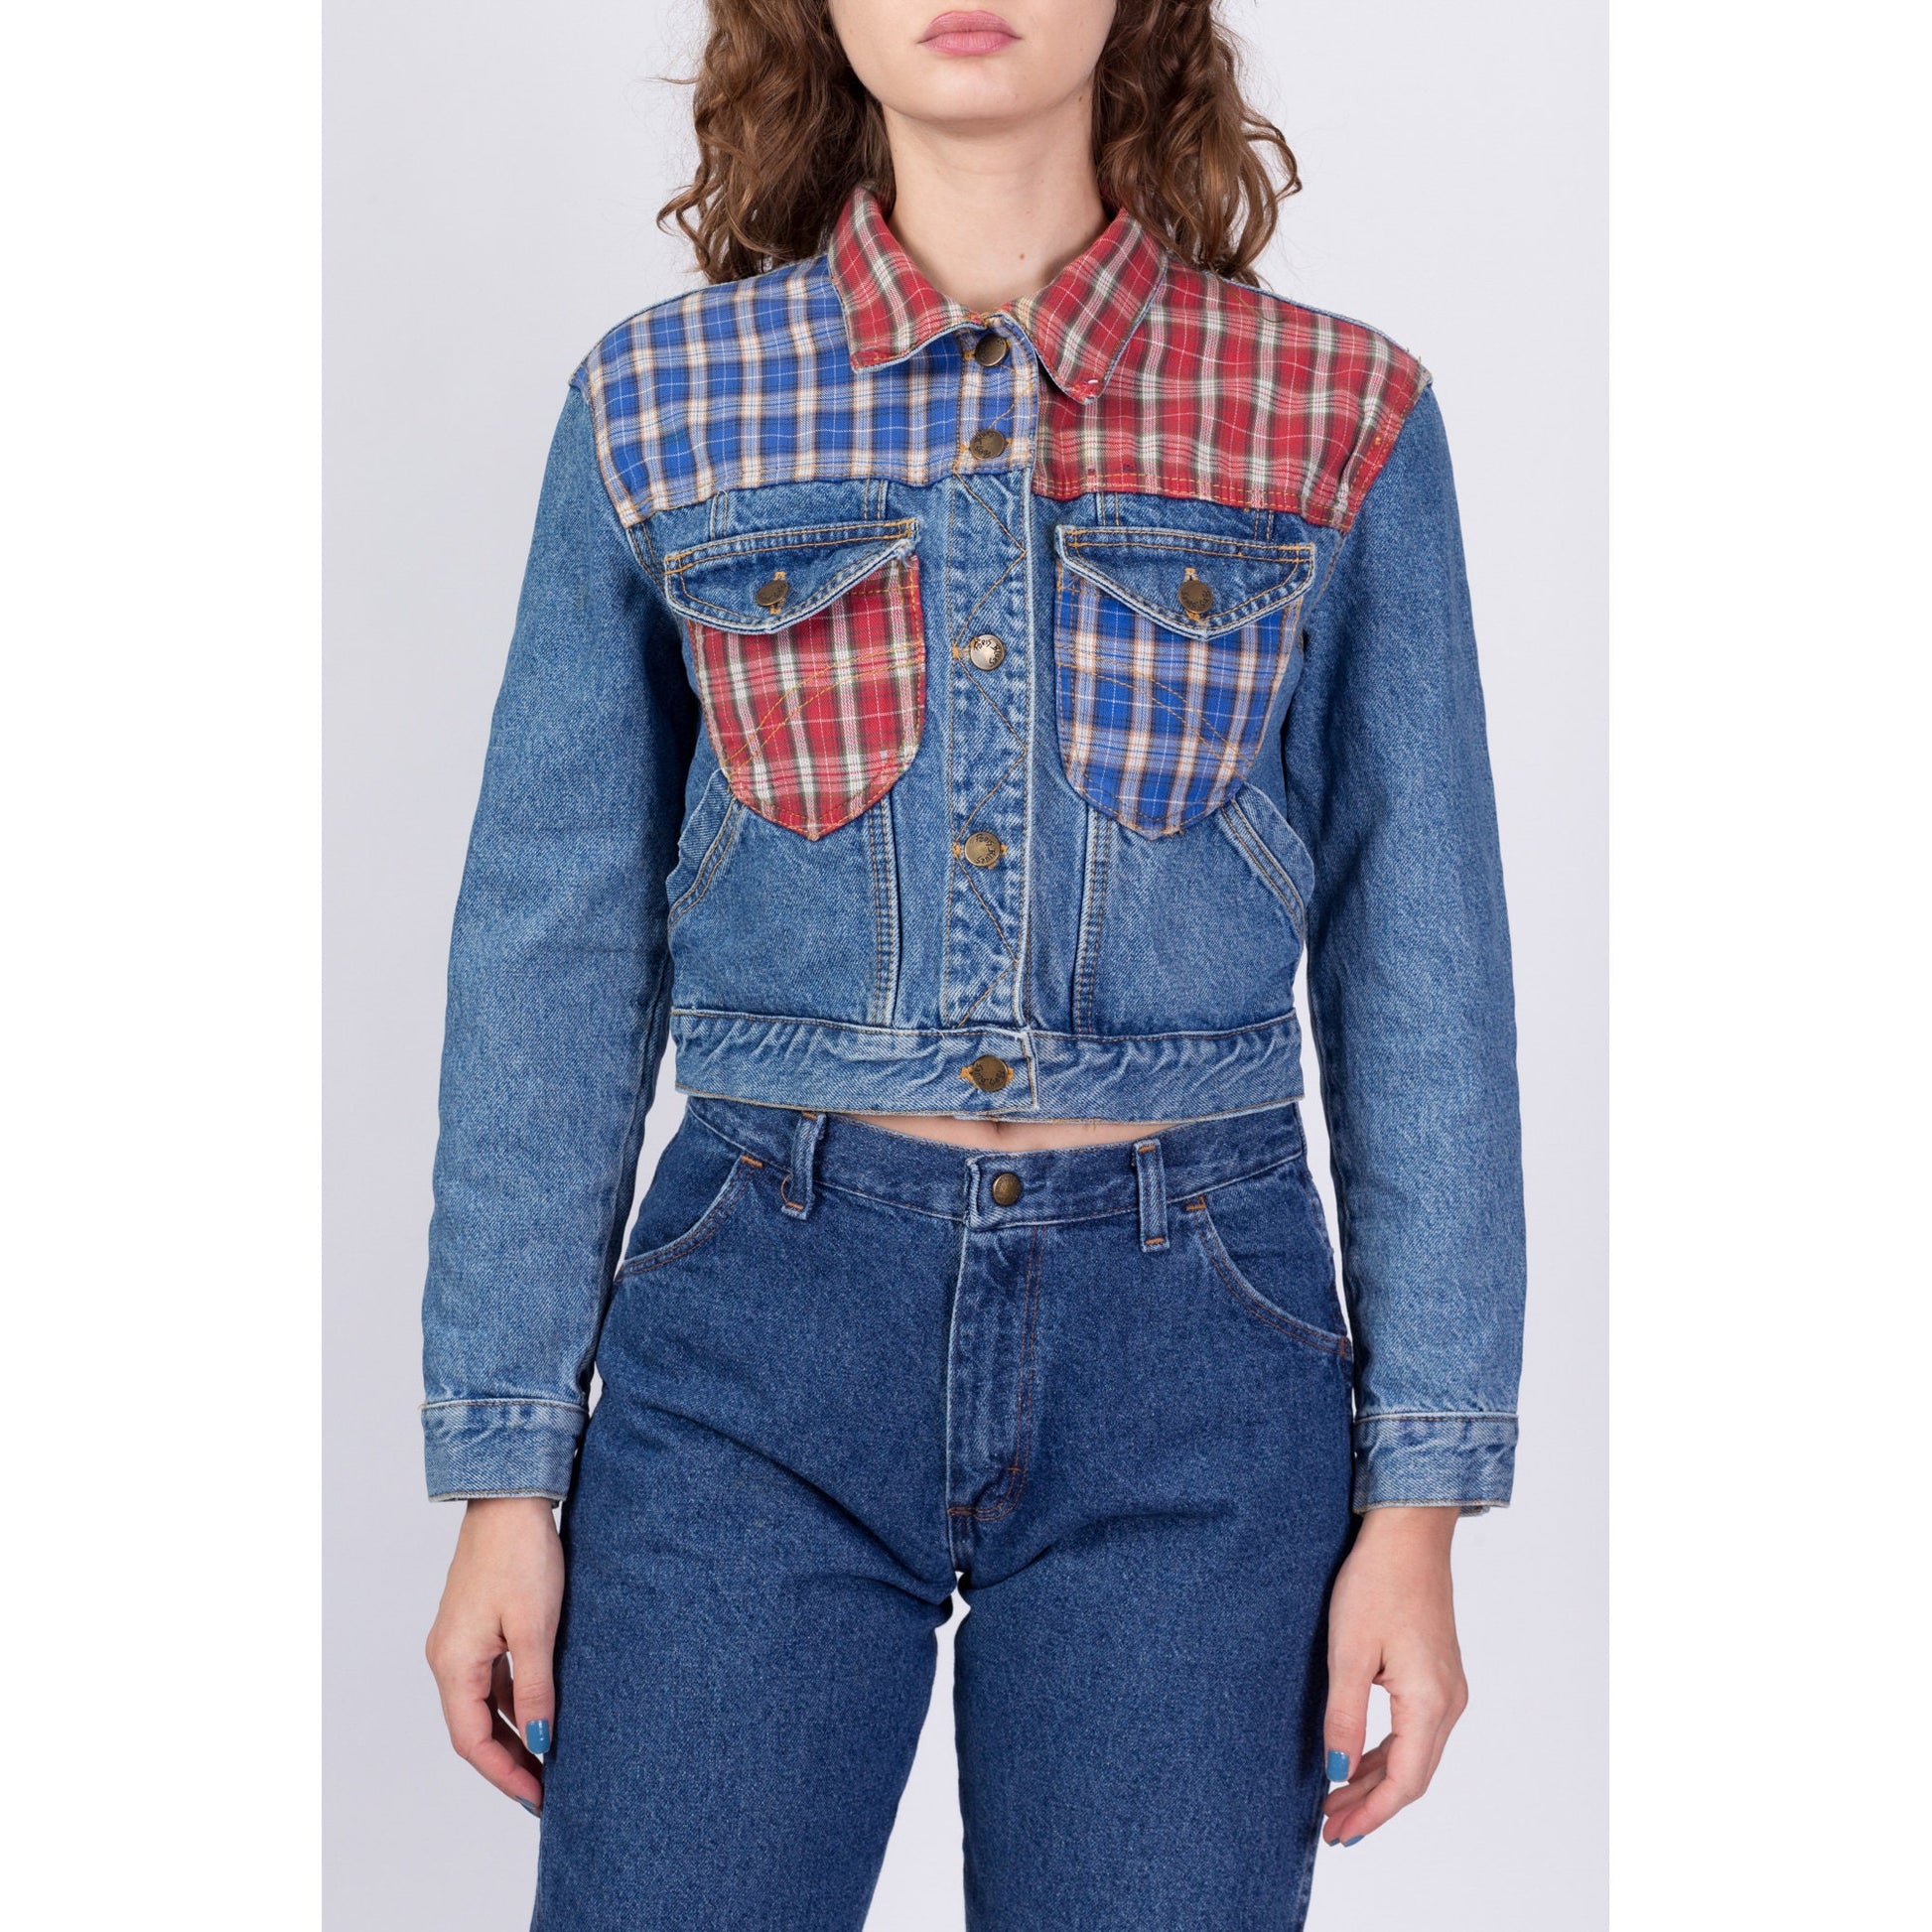 90s Flannel Trim Cropped Denim Jacket - Small 